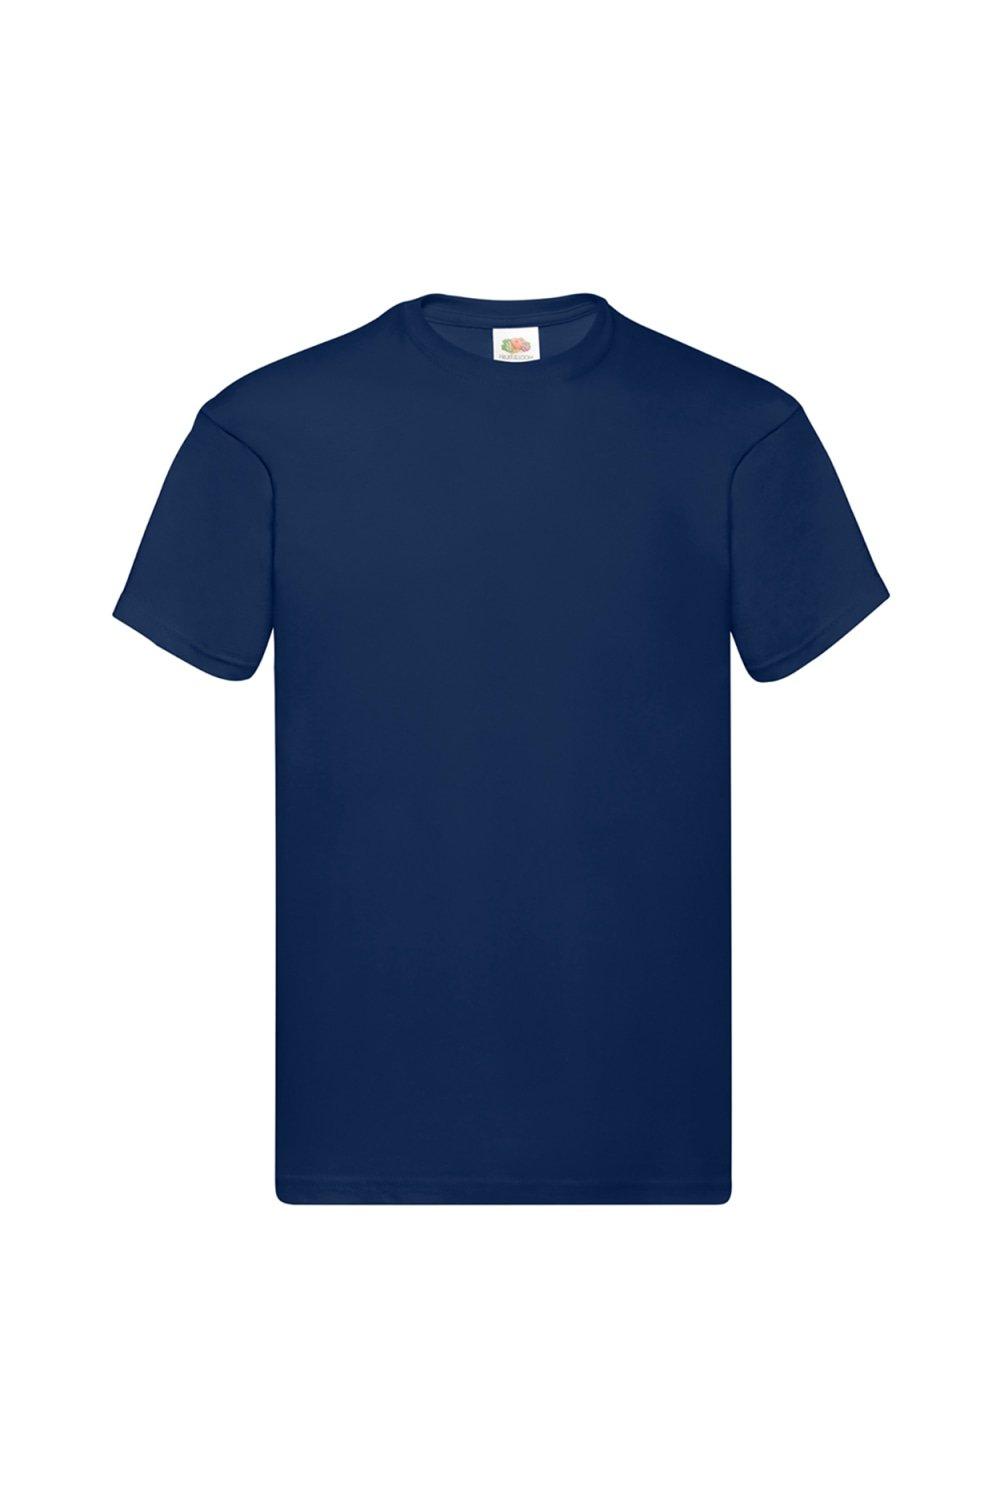 Оригинальная футболка с коротким рукавом Fruit of the Loom, темно-синий